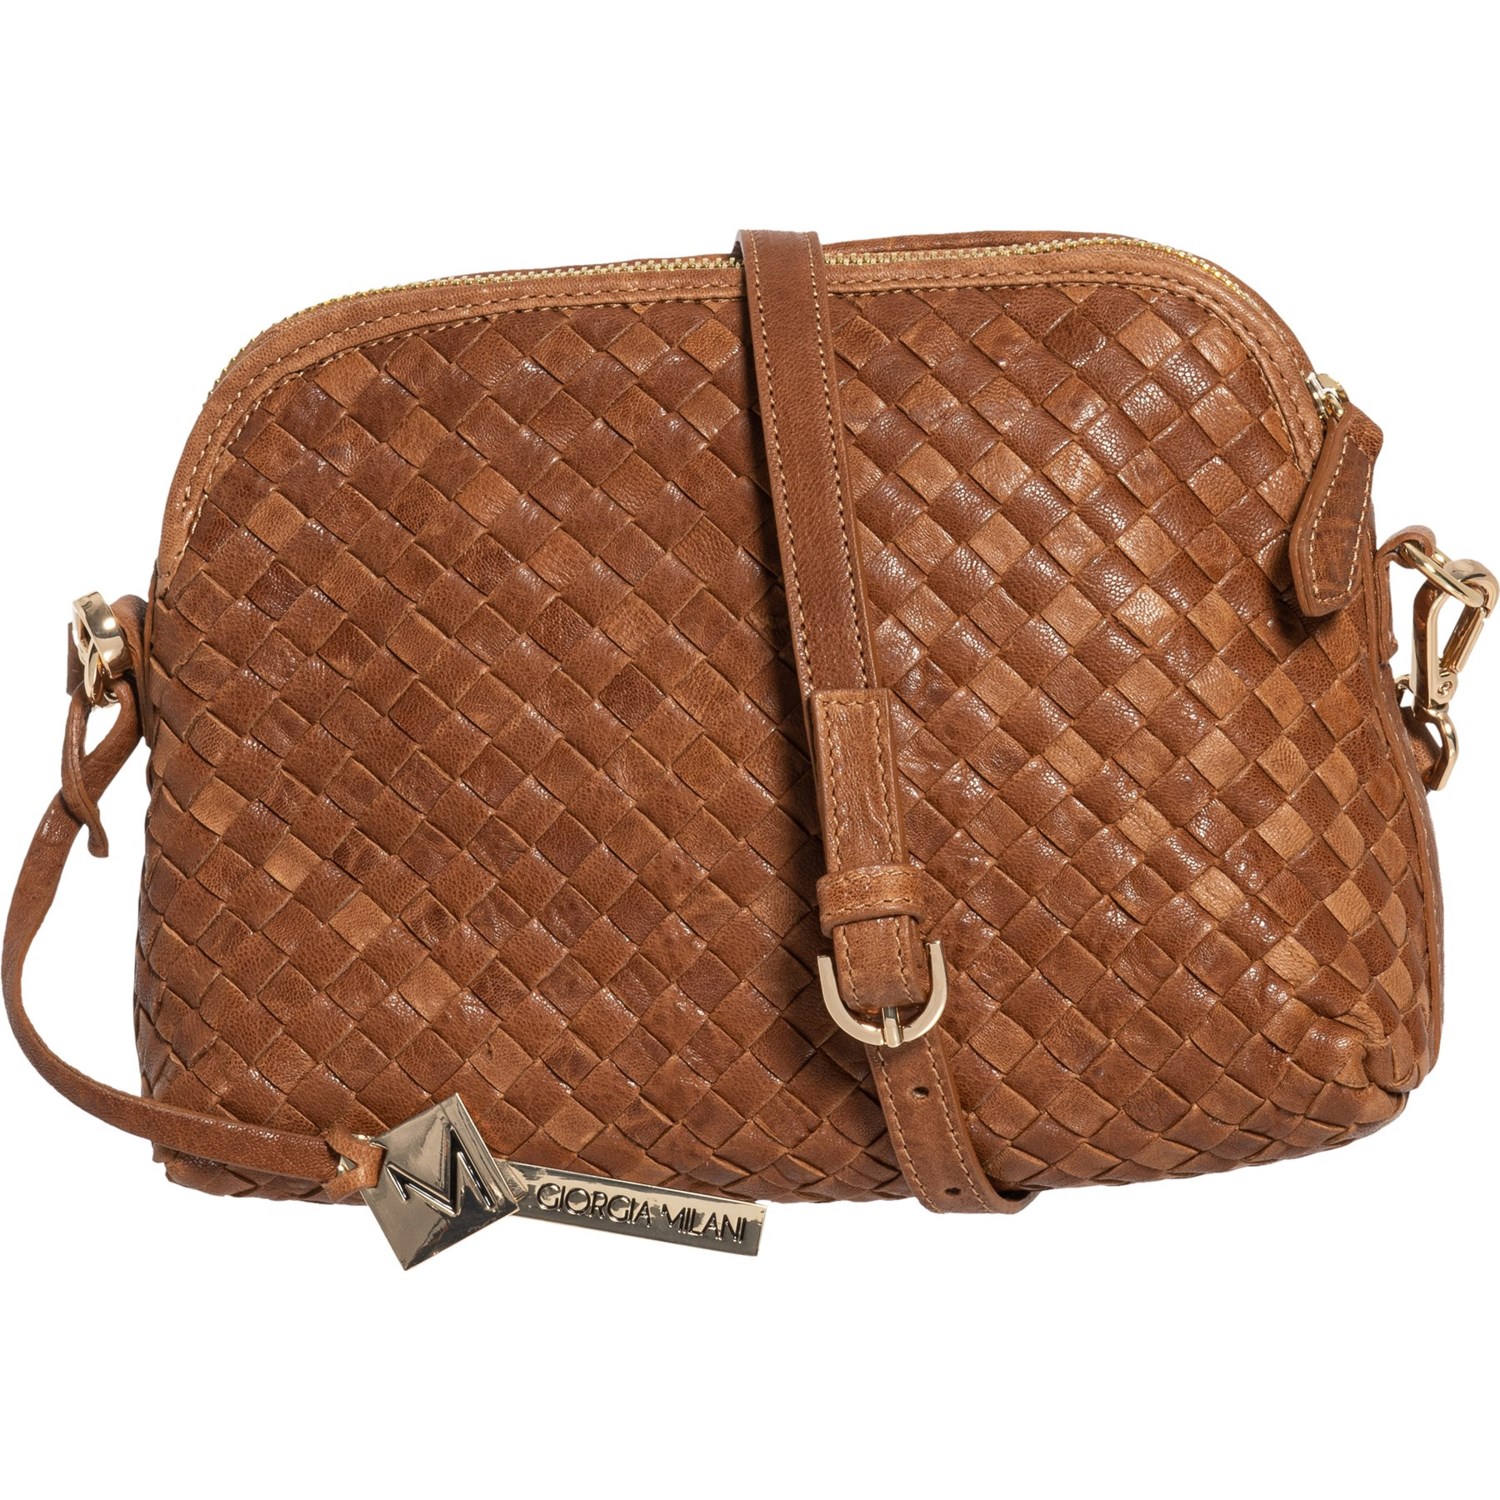 Giorgia Milani Made in Italy Dome Texas Crossbody Bag (For Women) - Save 44%